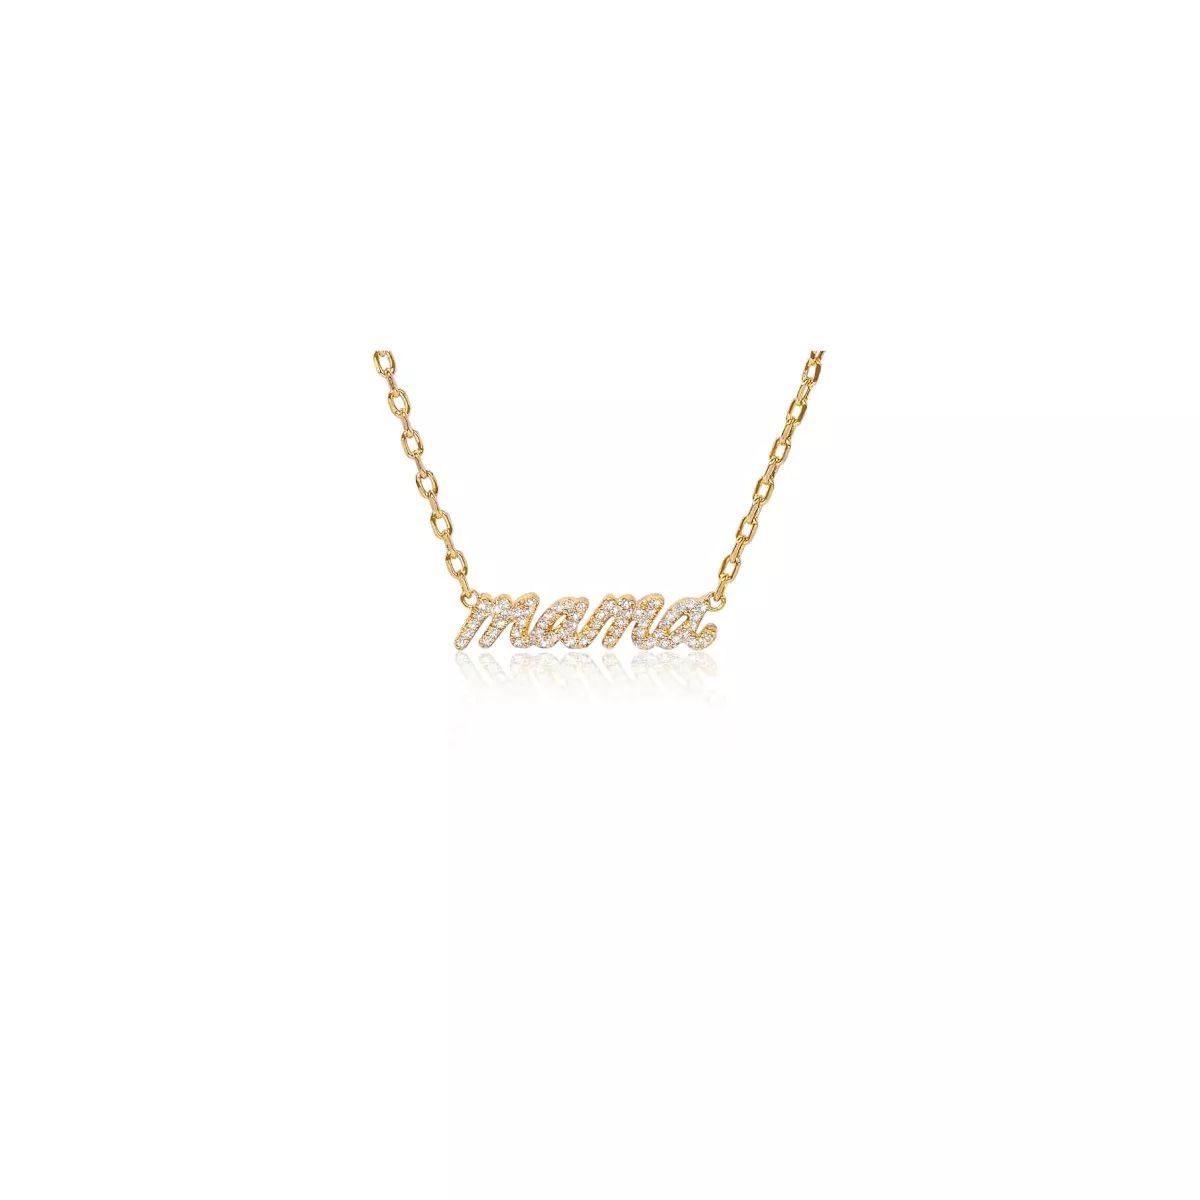 Benevolence LA 14K Gold Dipped Mama Bracelet with Pave Stones | Target